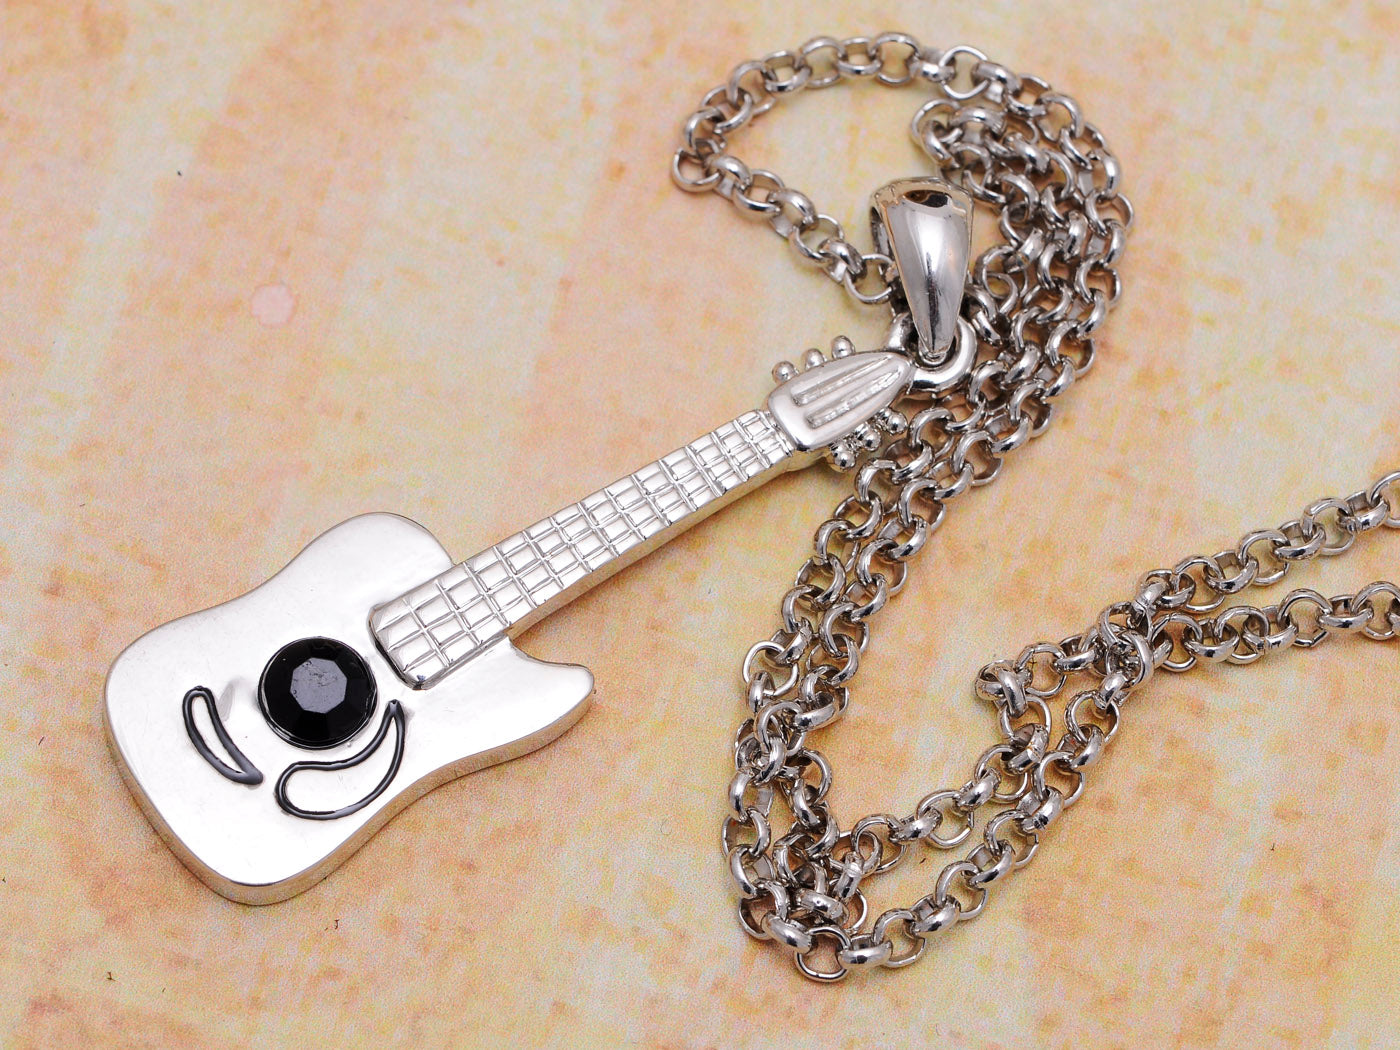 Rock N Roll Rockstar Music Acoustic Guitar Instrument Pendant Necklace